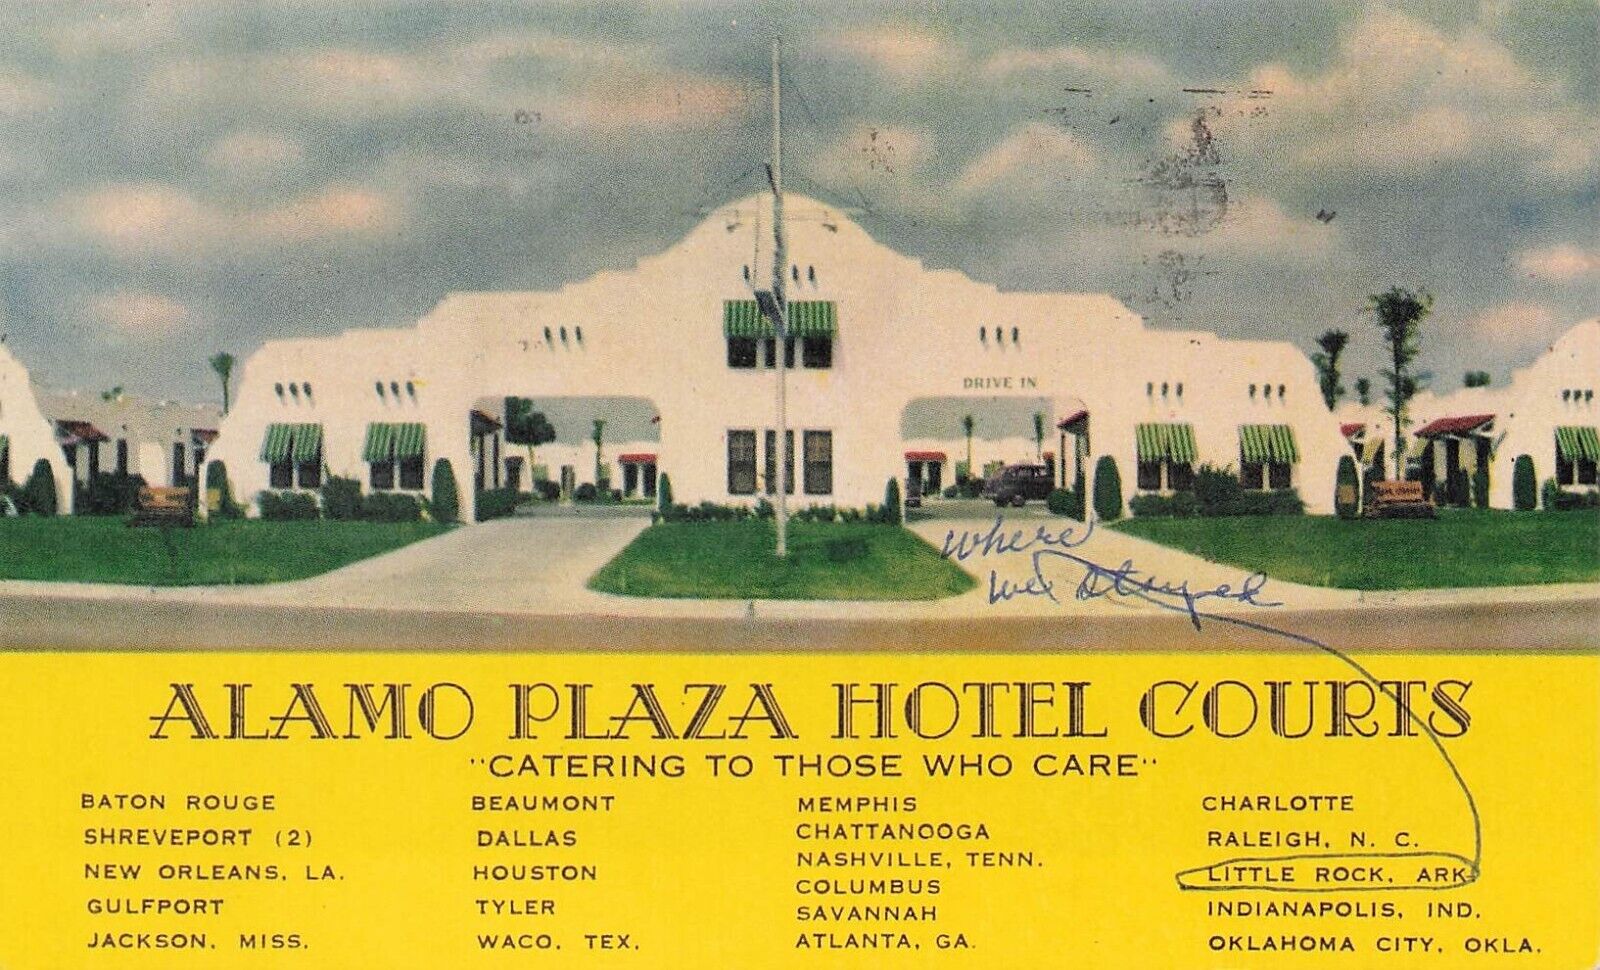 Alamo Plaza Hotel Courts Little Rock Arkansas PM 1958